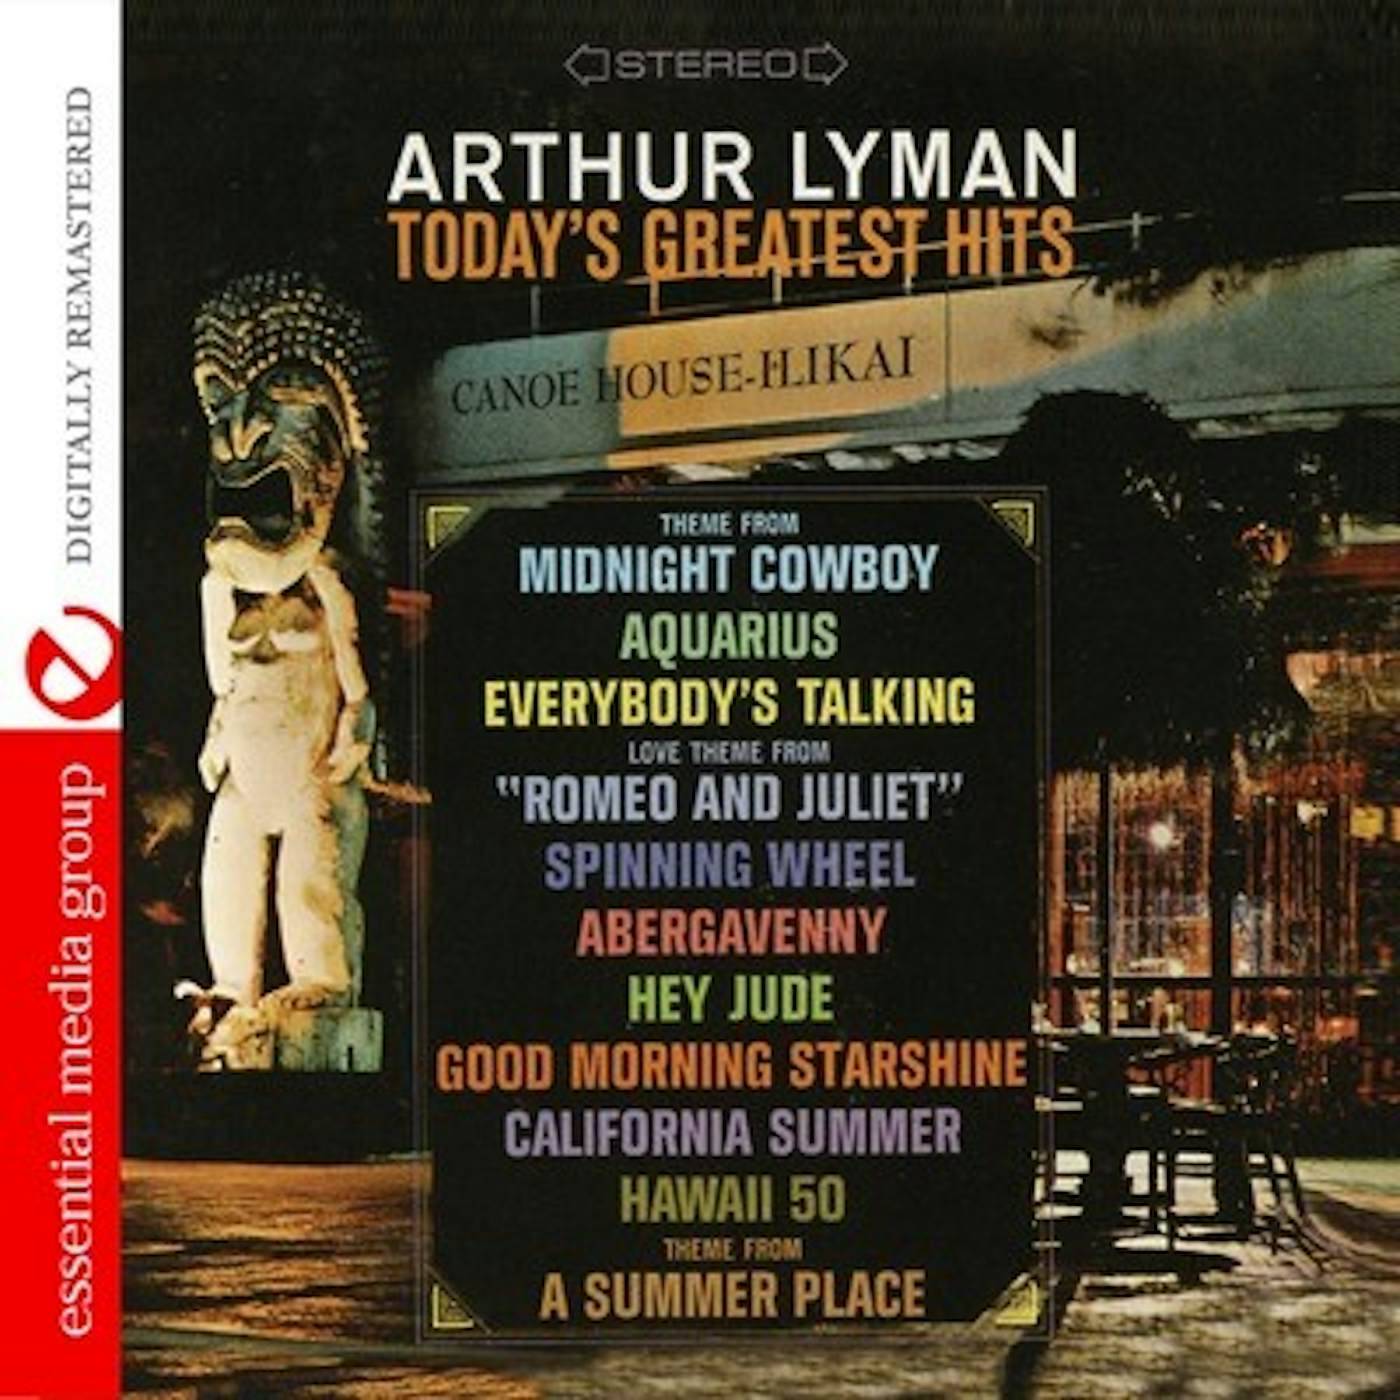 Arthur Lyman TODAY'S GREATEST HITS CD